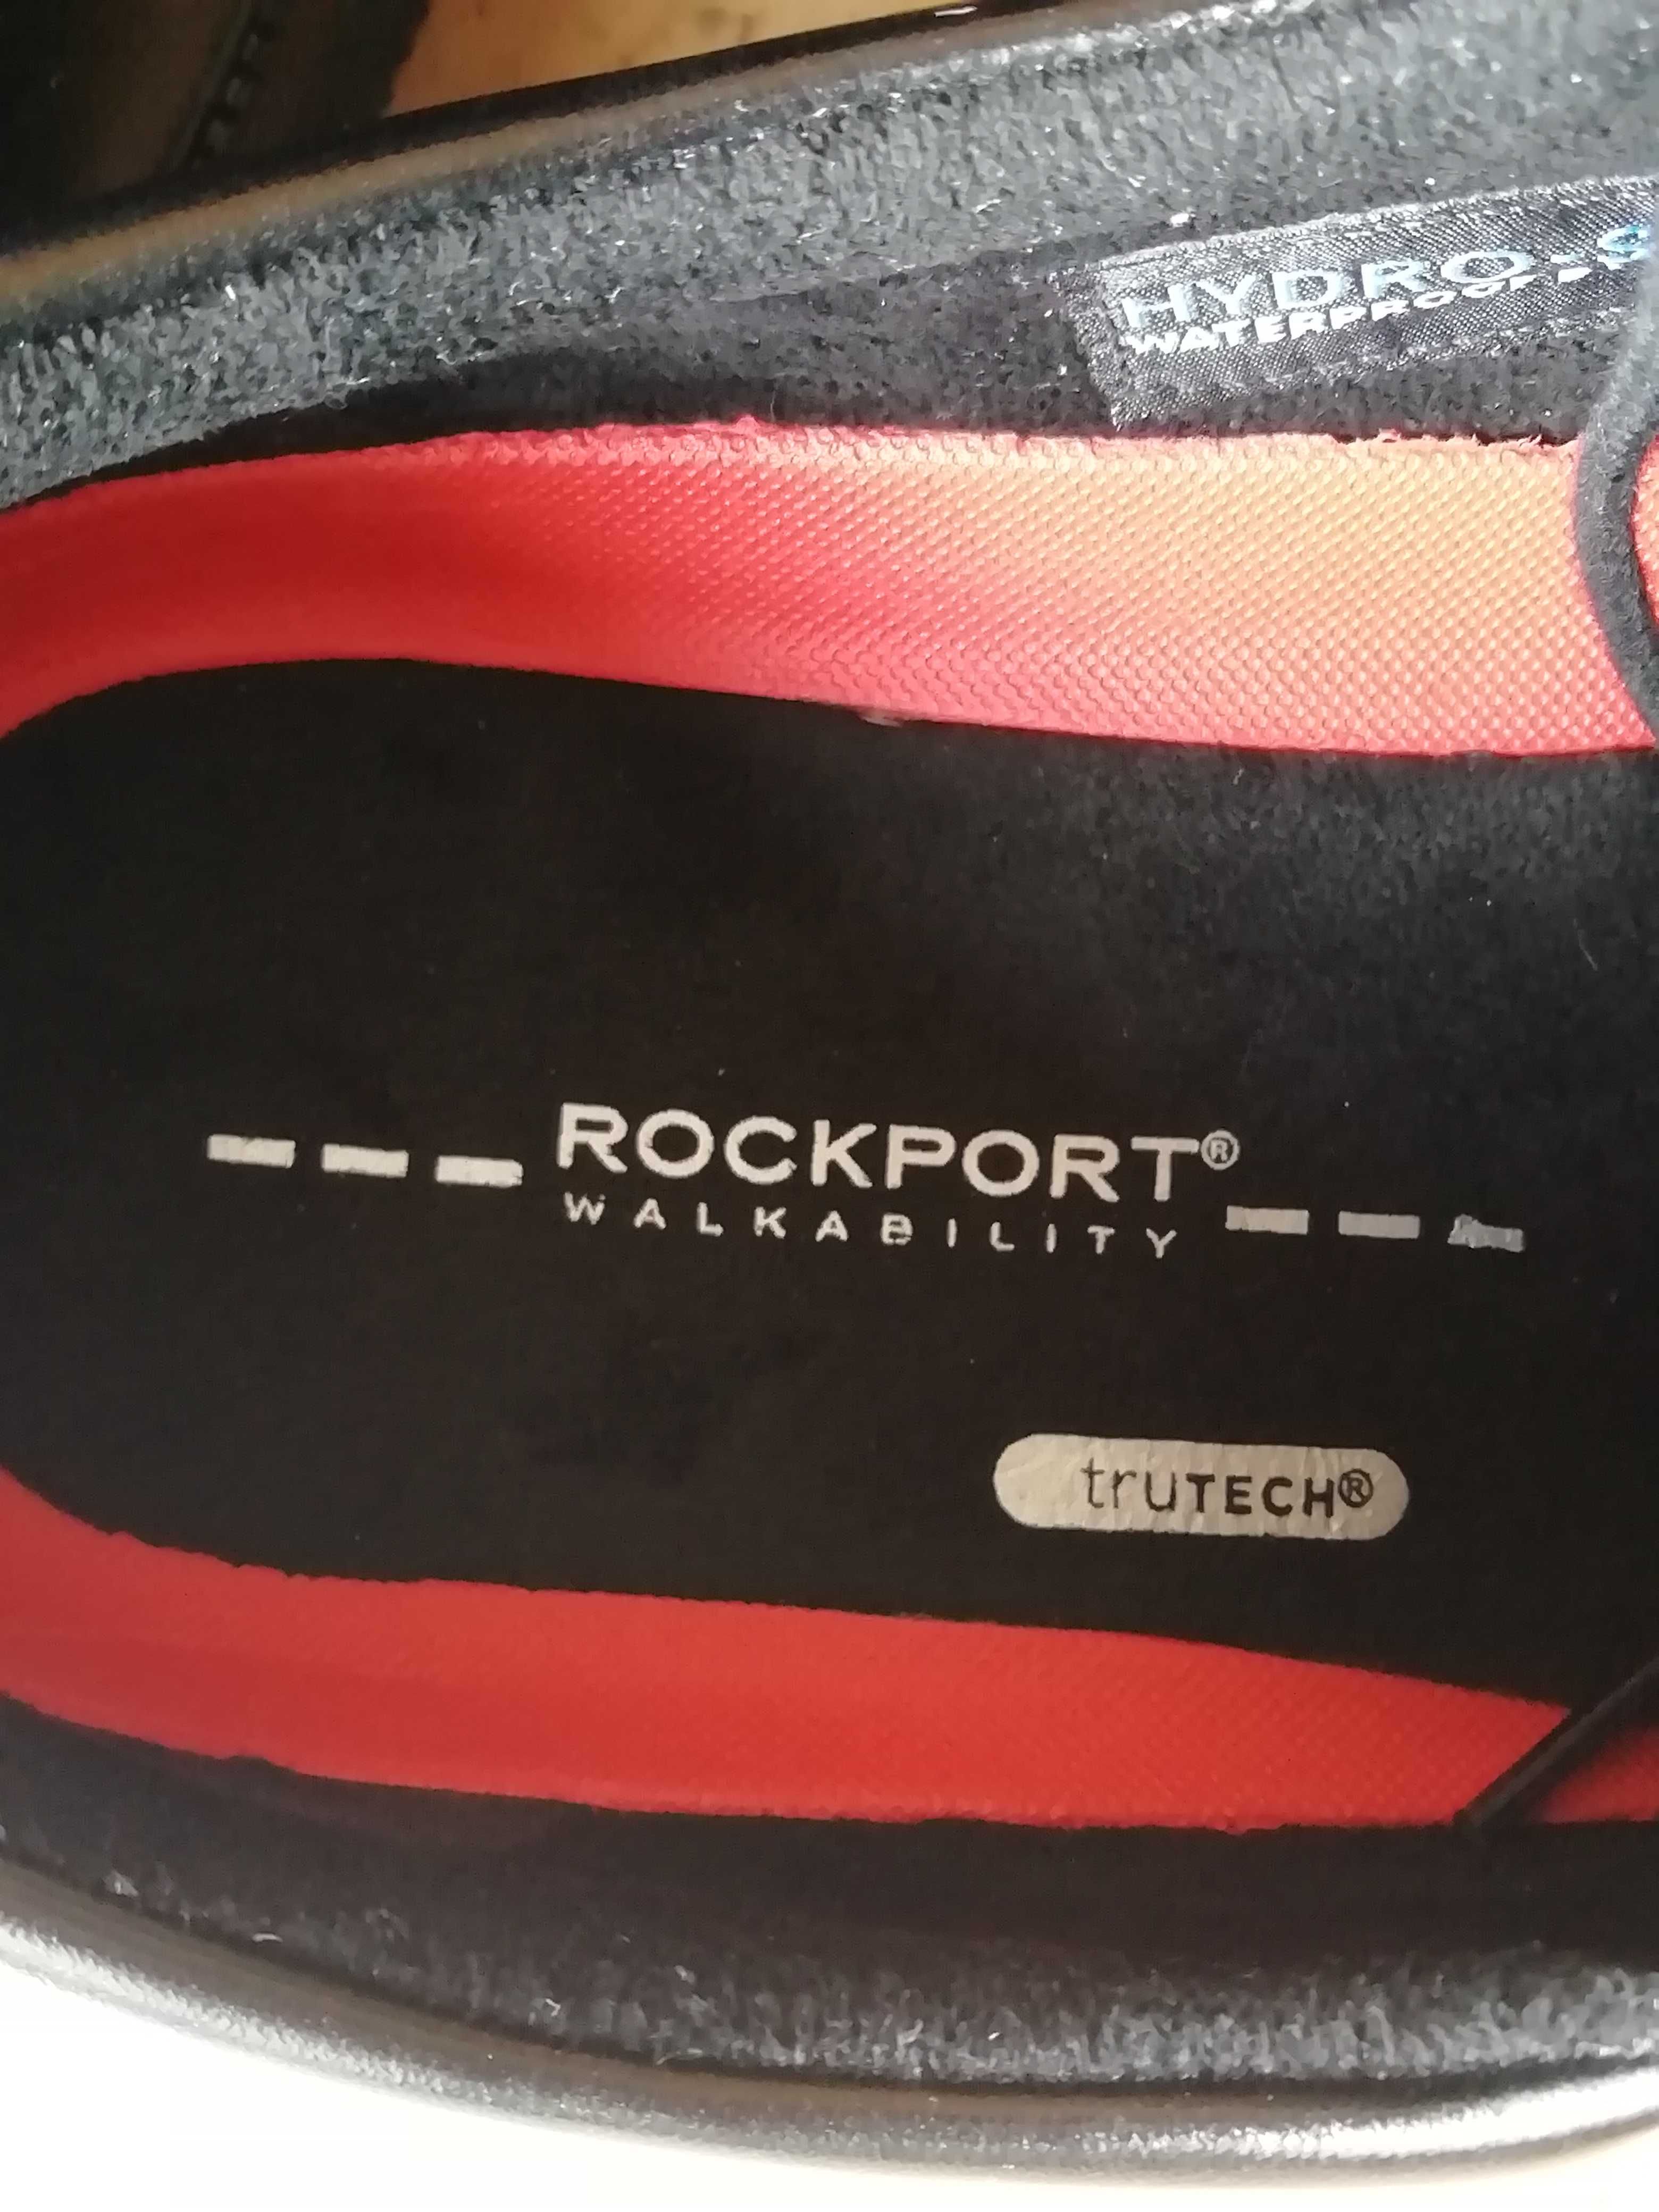 Sapatos Rockport 42,5